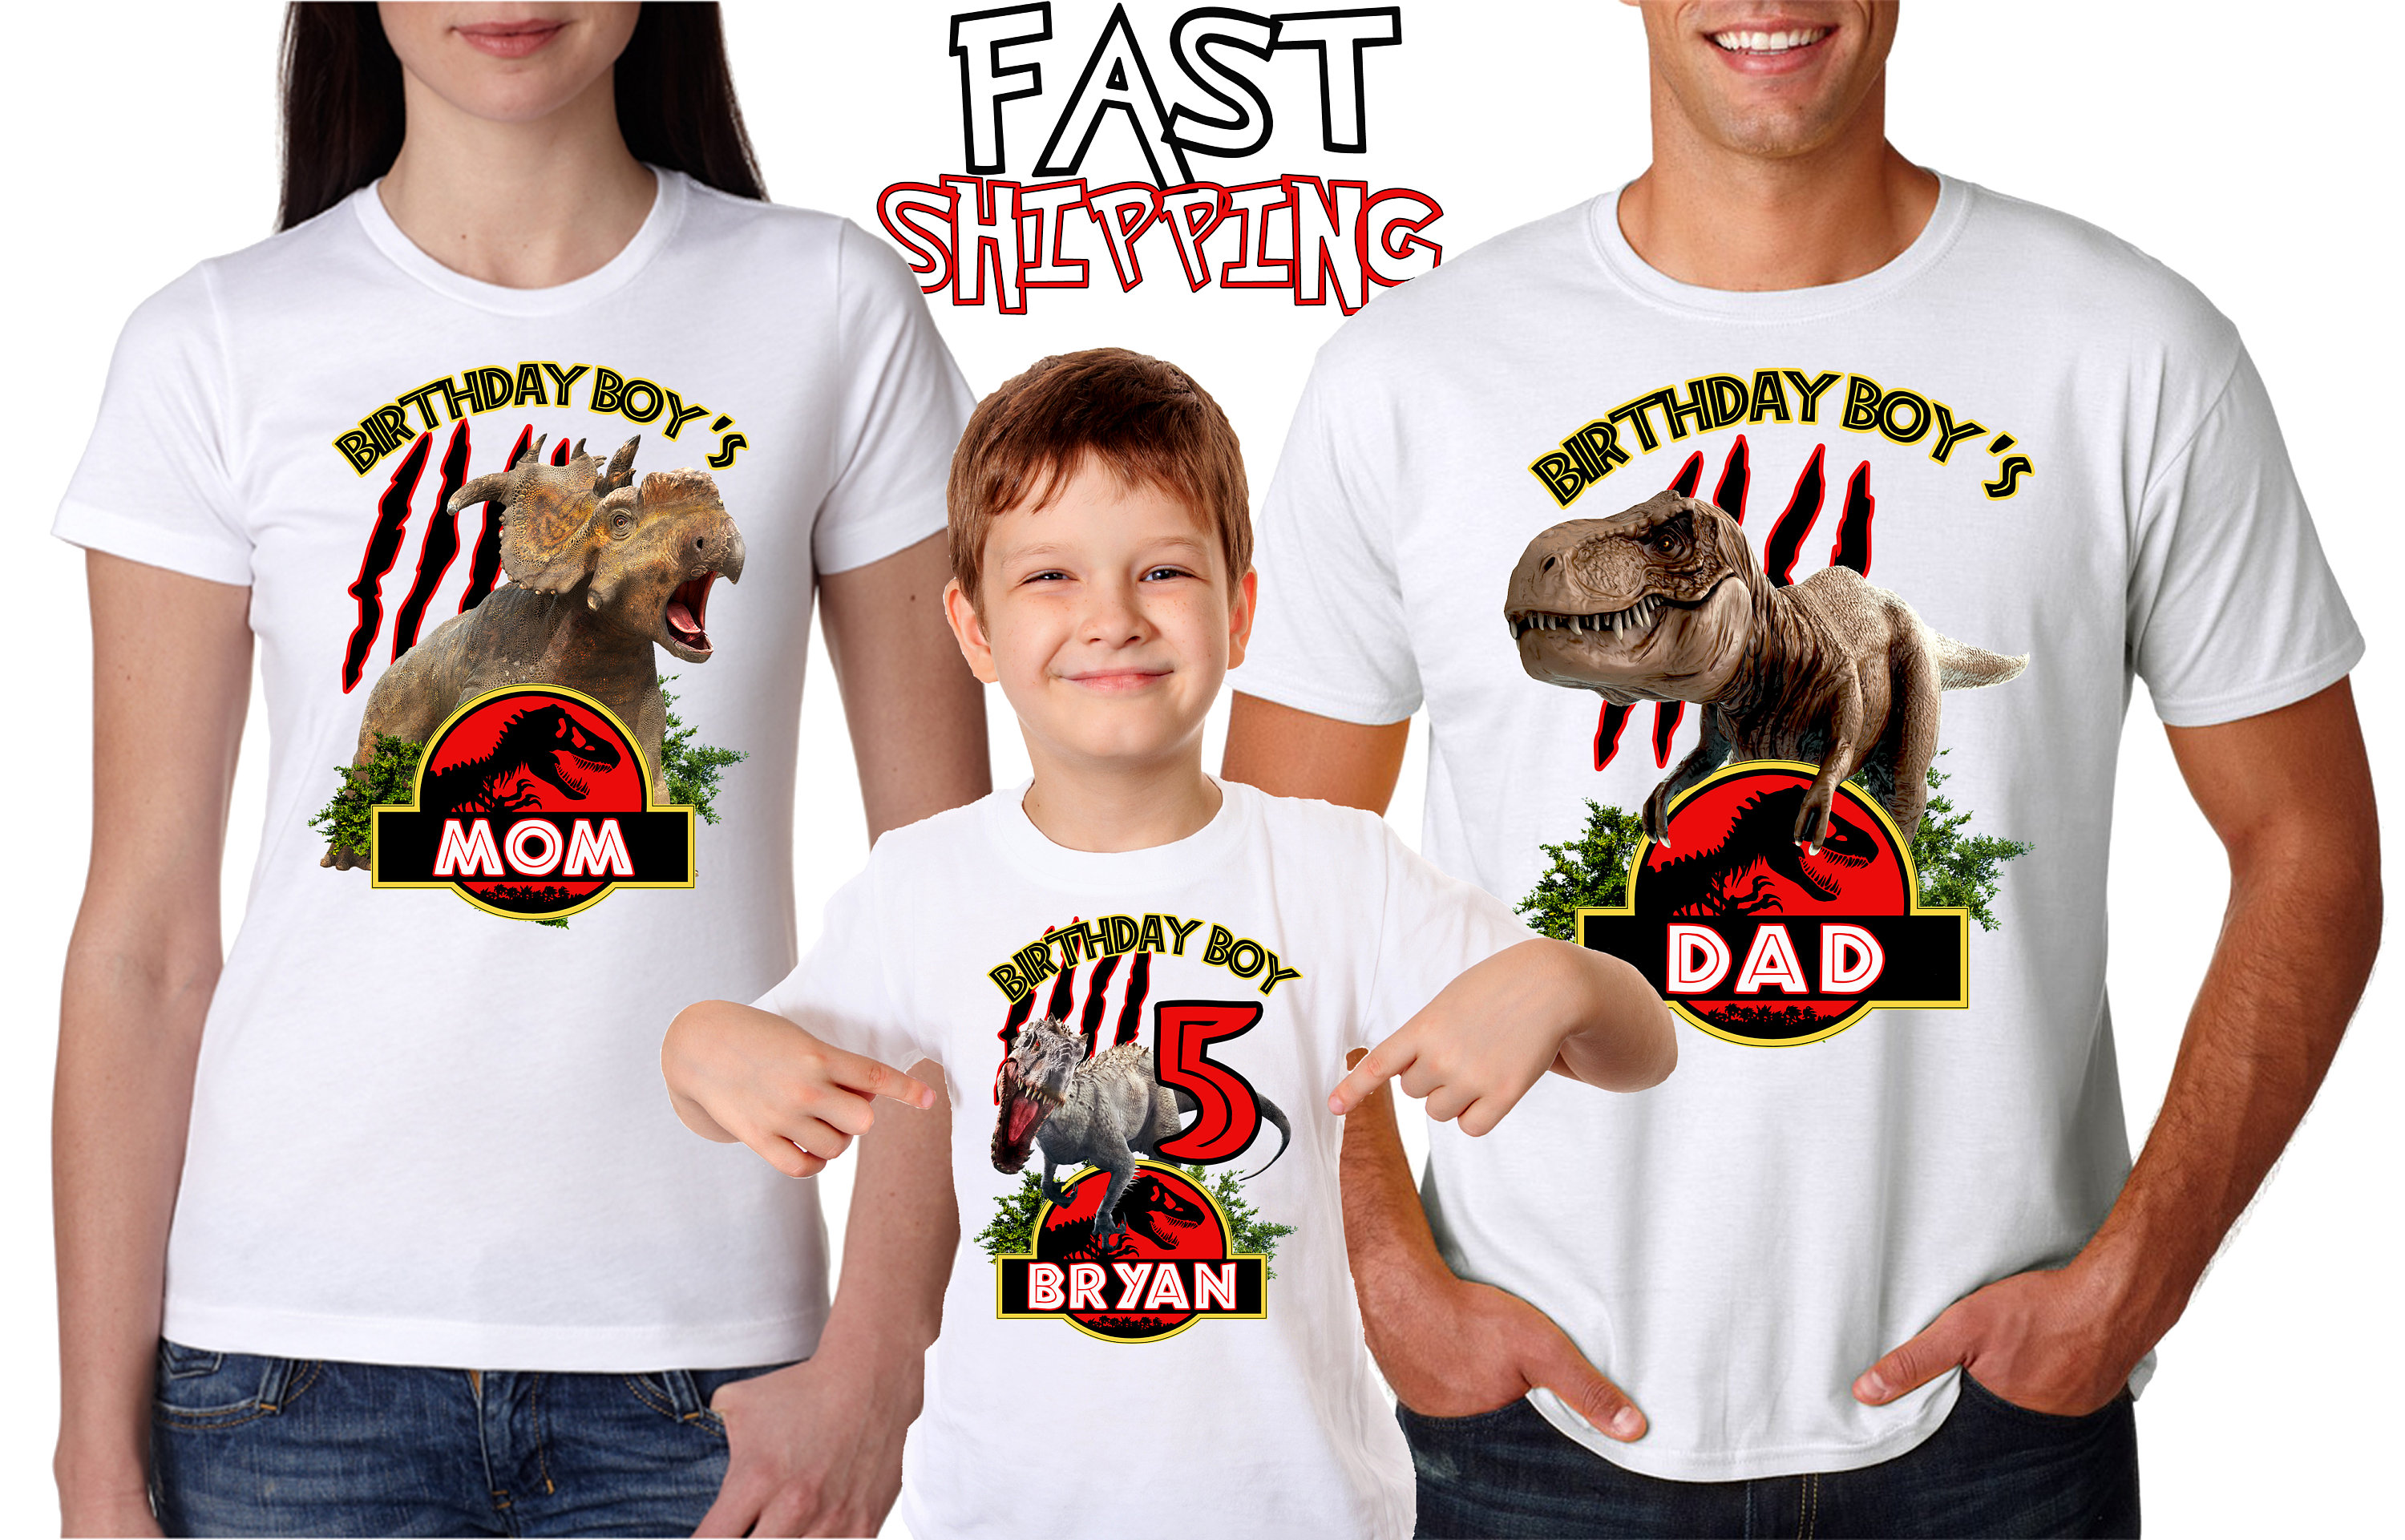 Jurassic Park Birthday Boy Birthday Girl Shirts for All